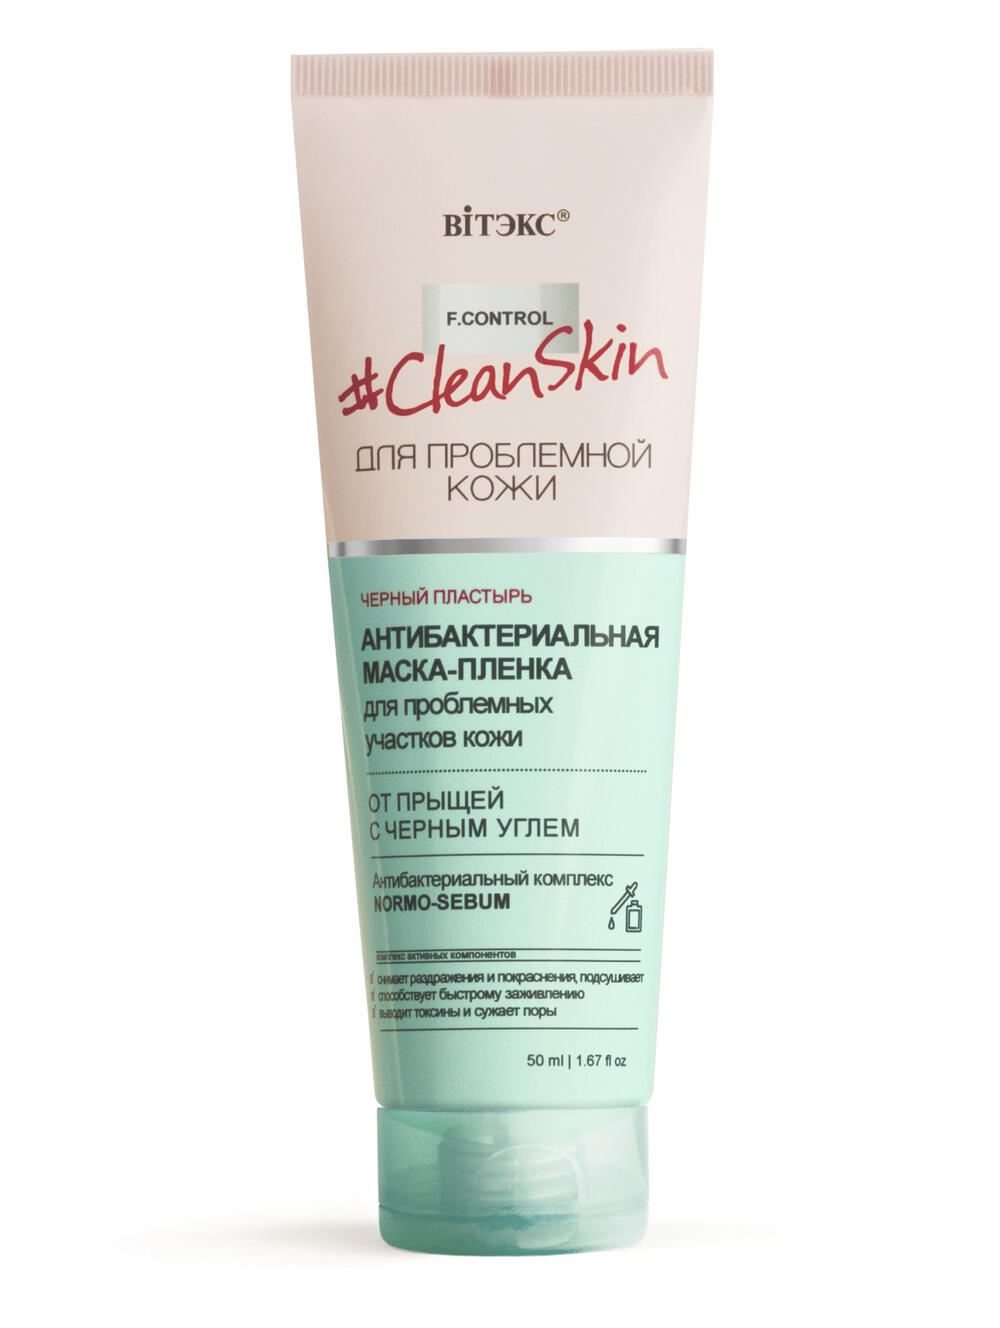 Clean skin preparati za lice